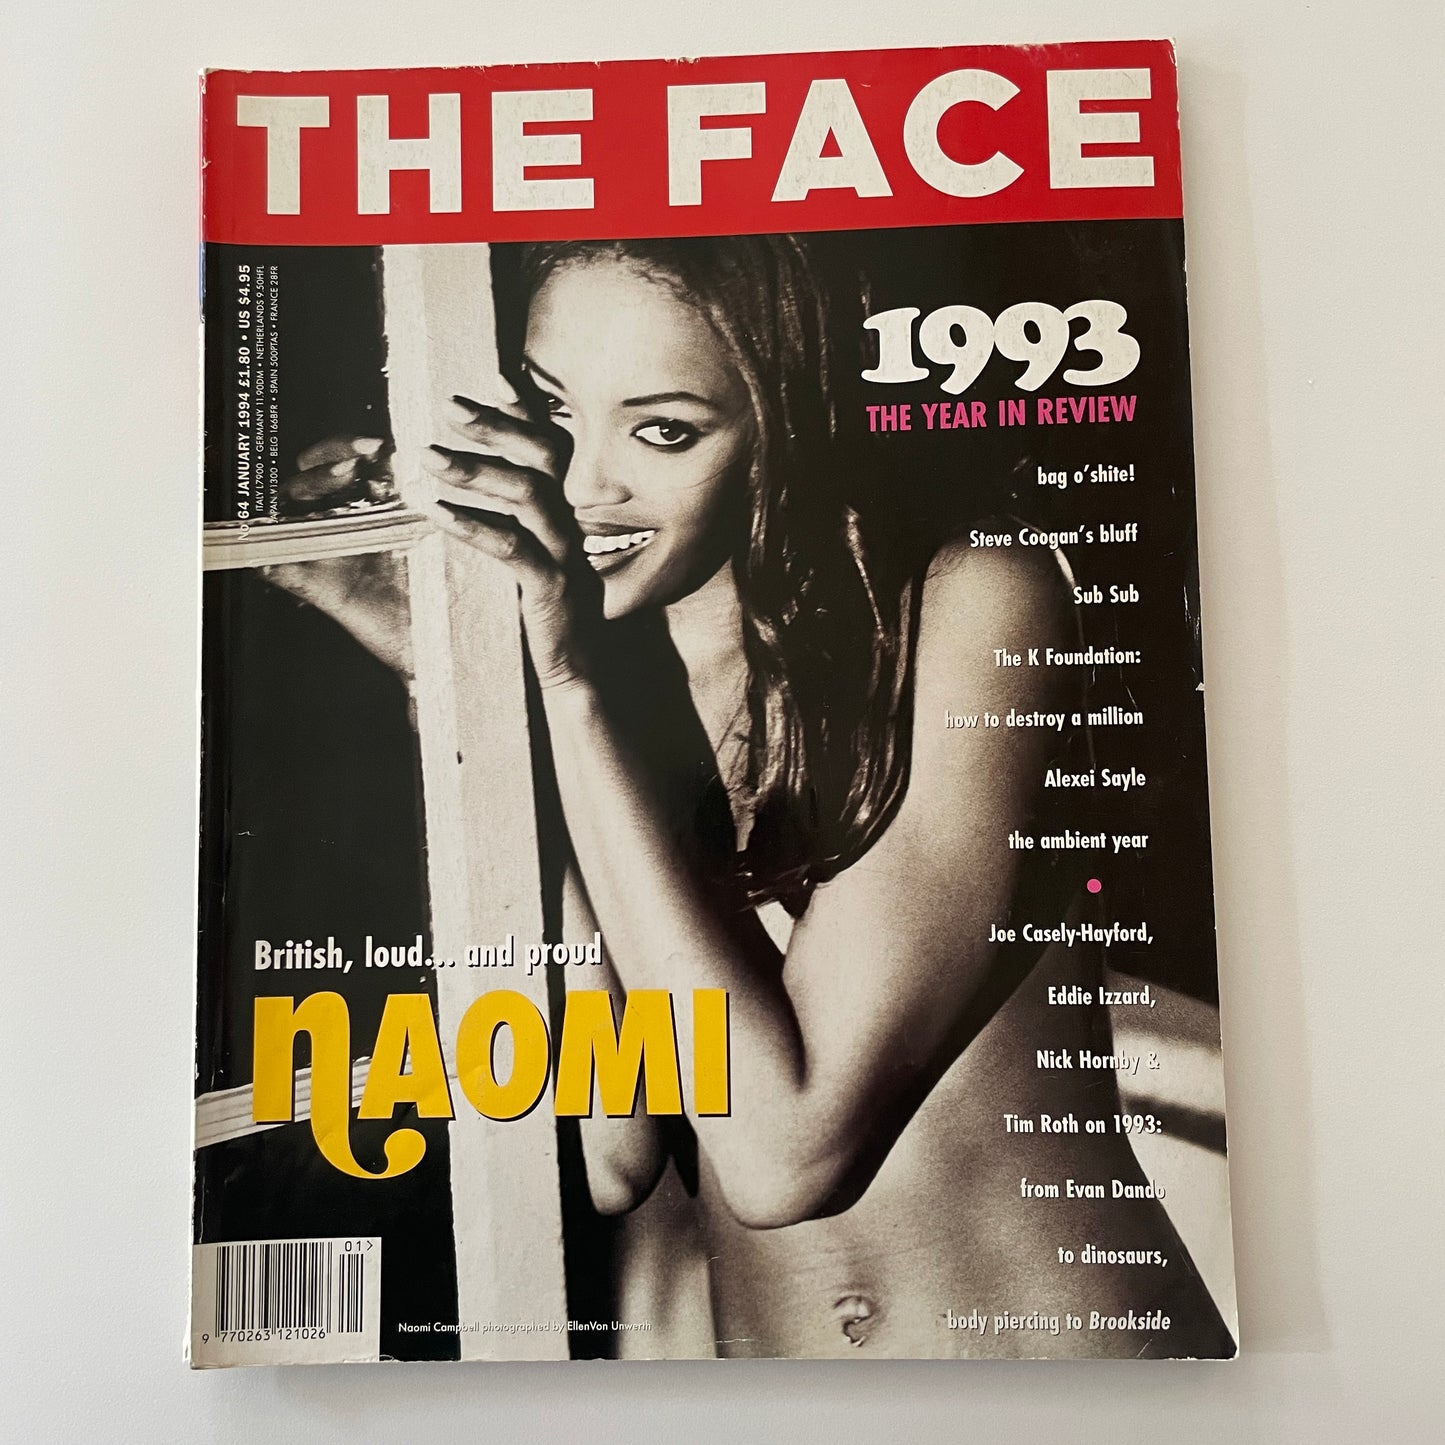 The Face No.64 - January 1994 - Naomi Campbell